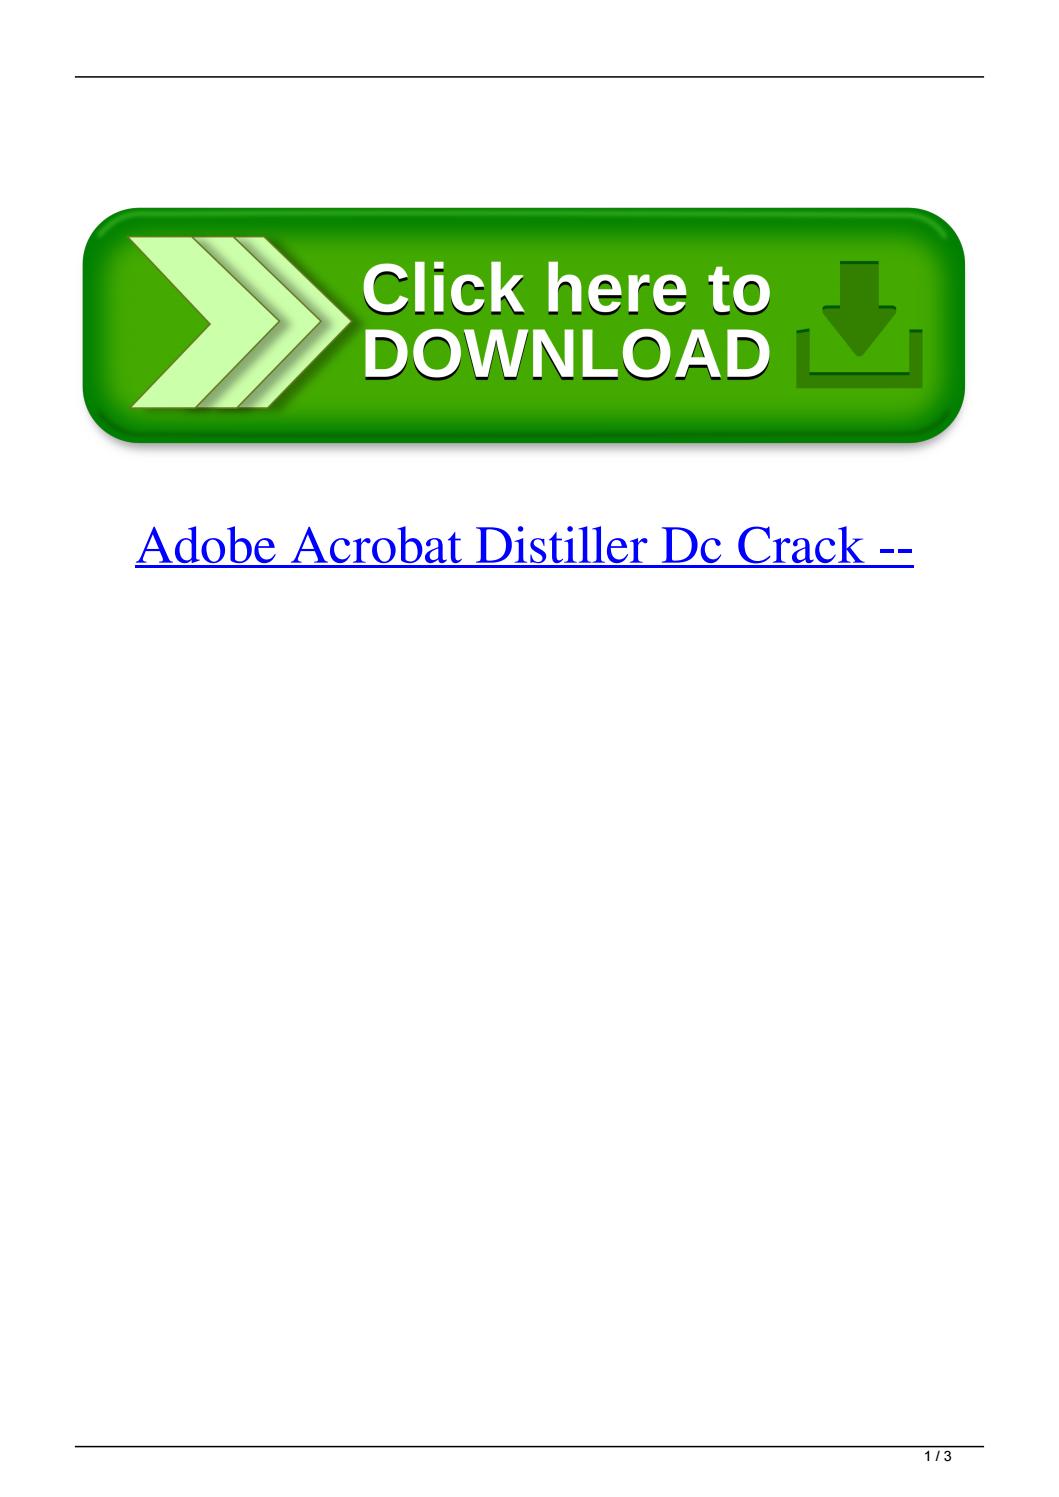 Adobe acrobat distiller